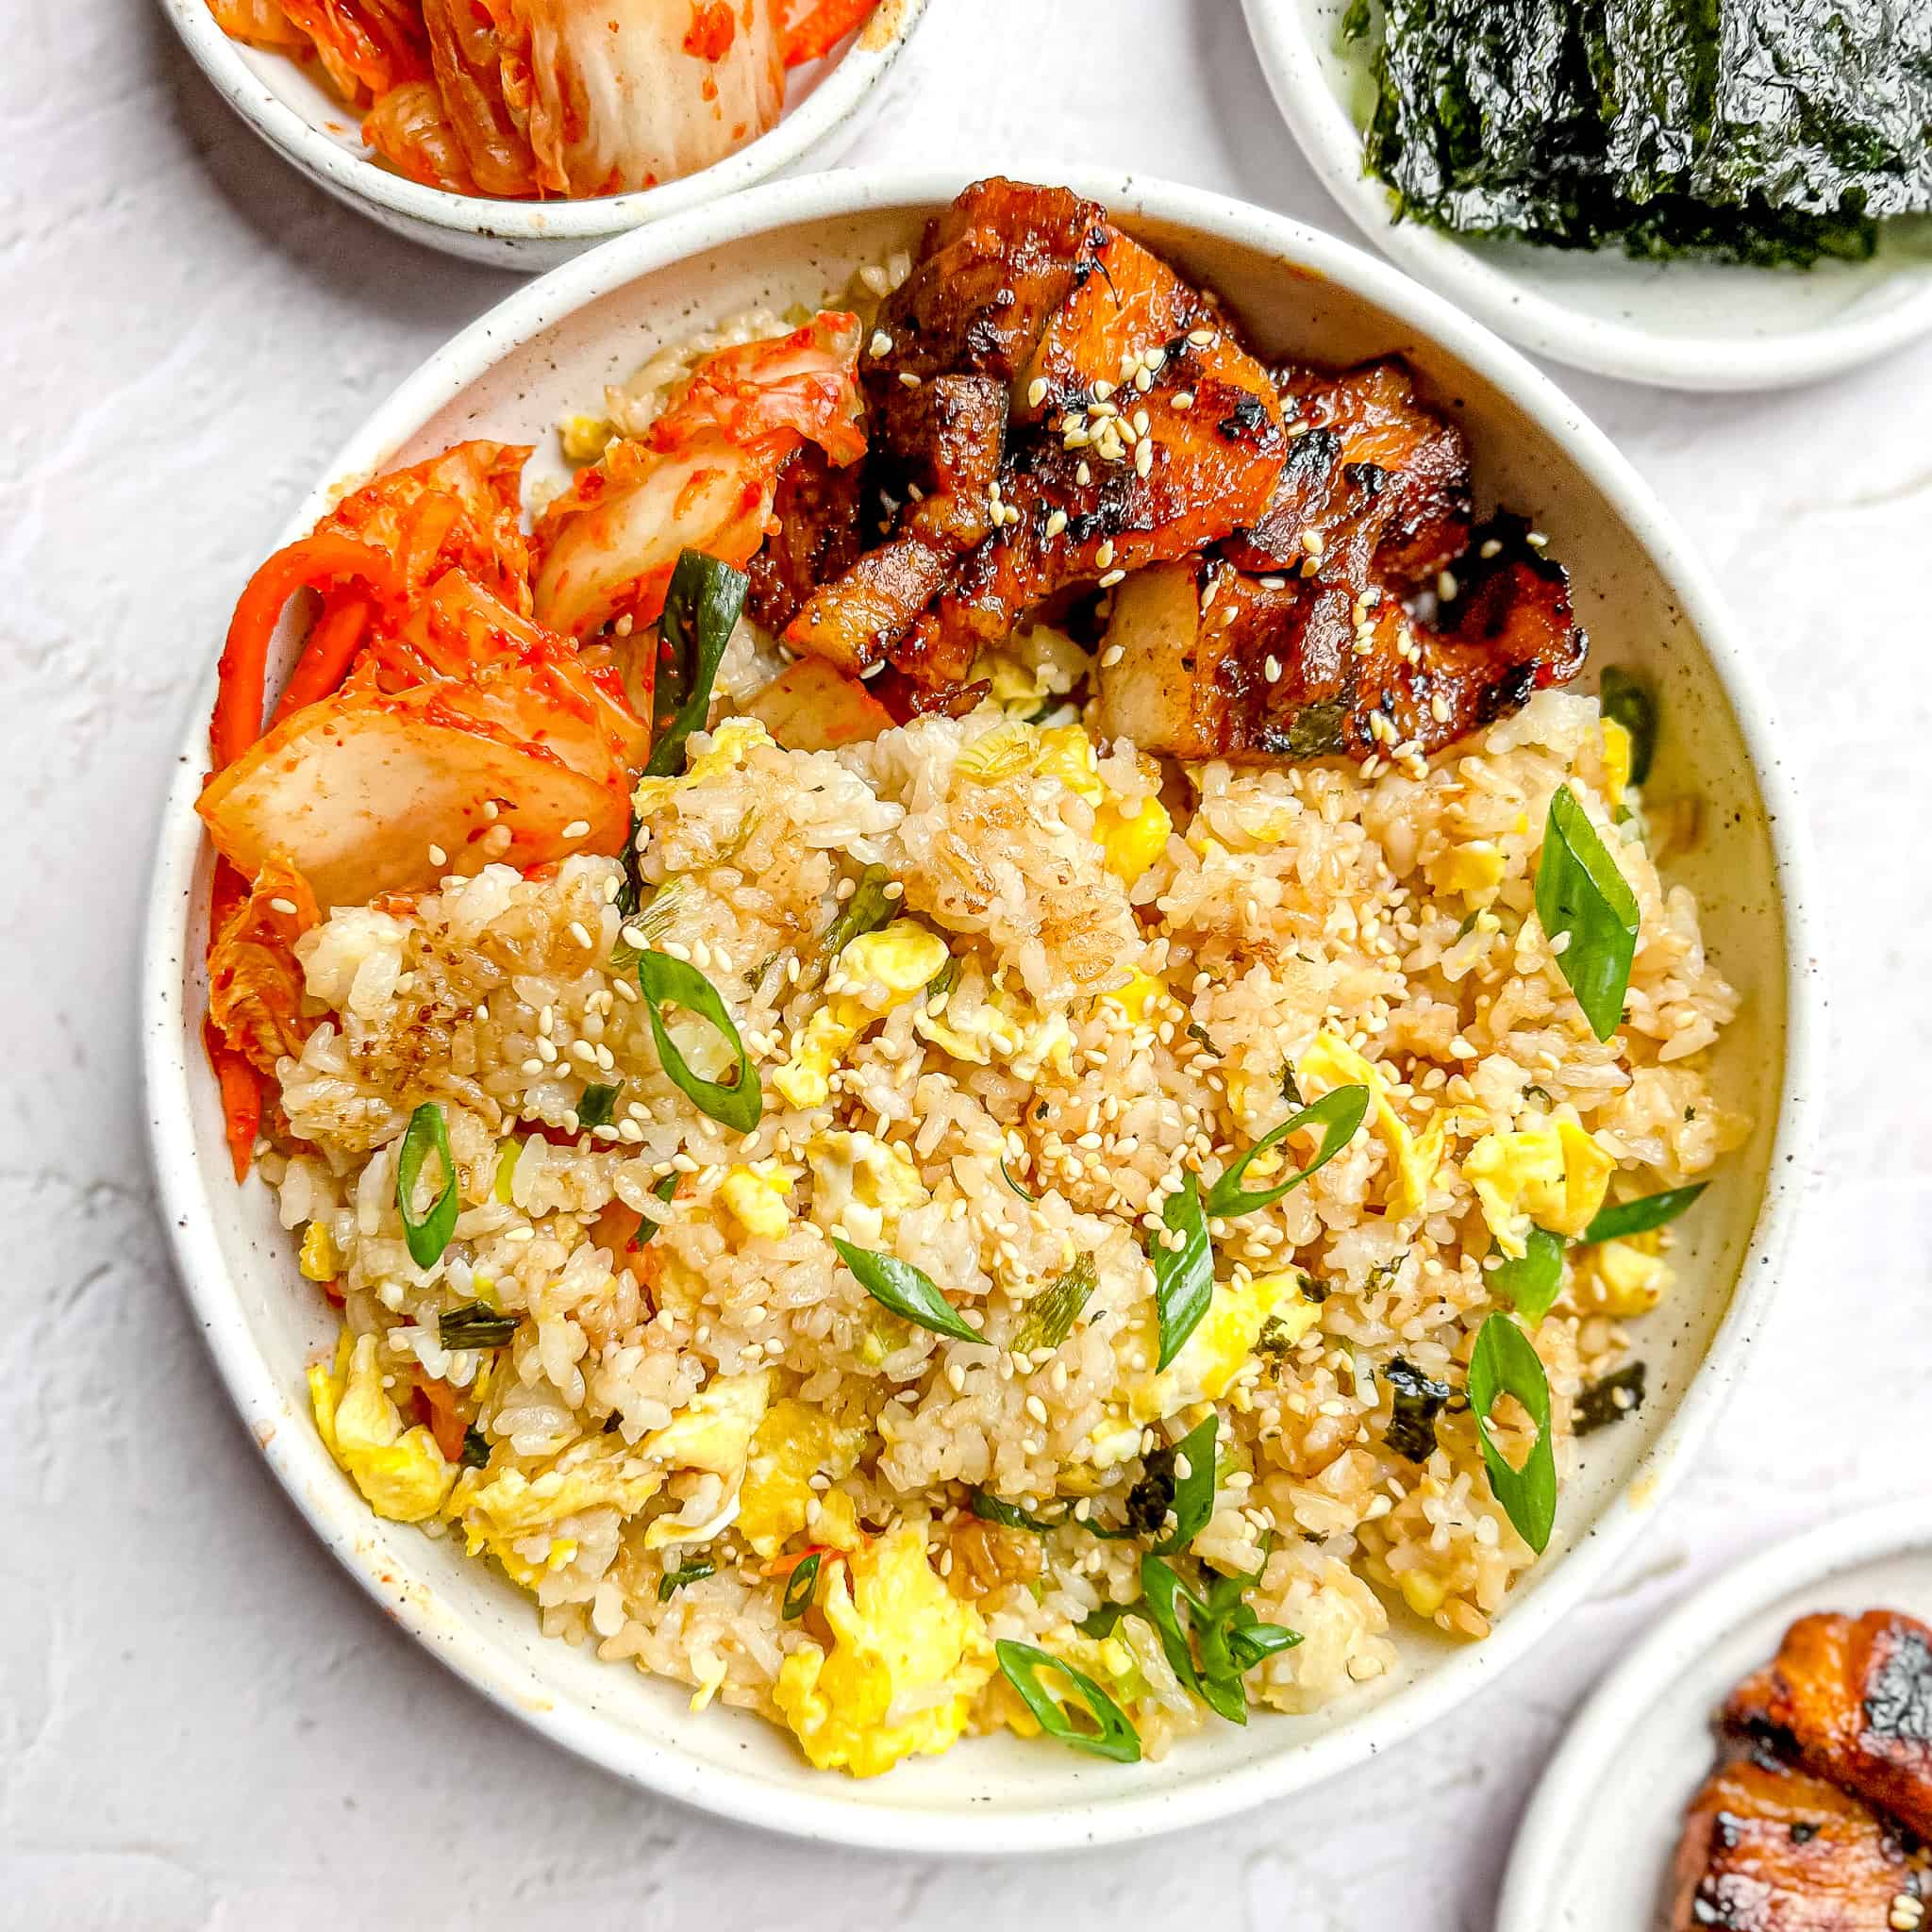 Gyeran Bokkeumbap with Pork Belly (Korean Egg Fried Rice)